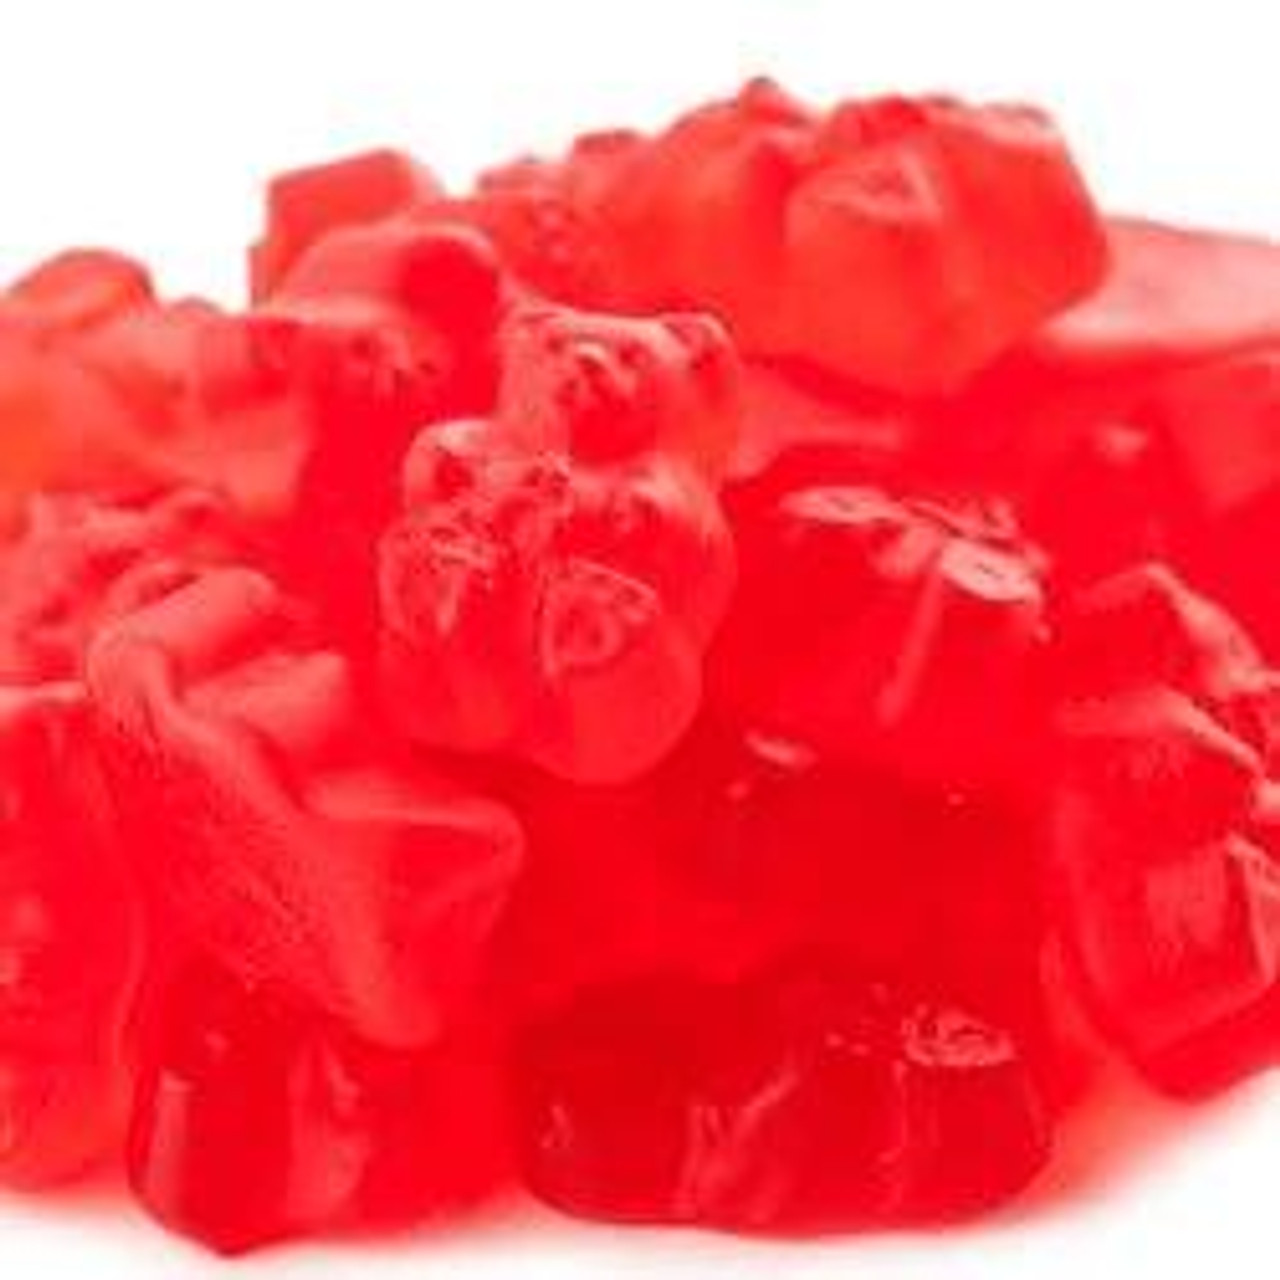 Chicken Pieces Strawberry Gummy Bears Bulk Food Service 20 lbs/9.07 kgs 